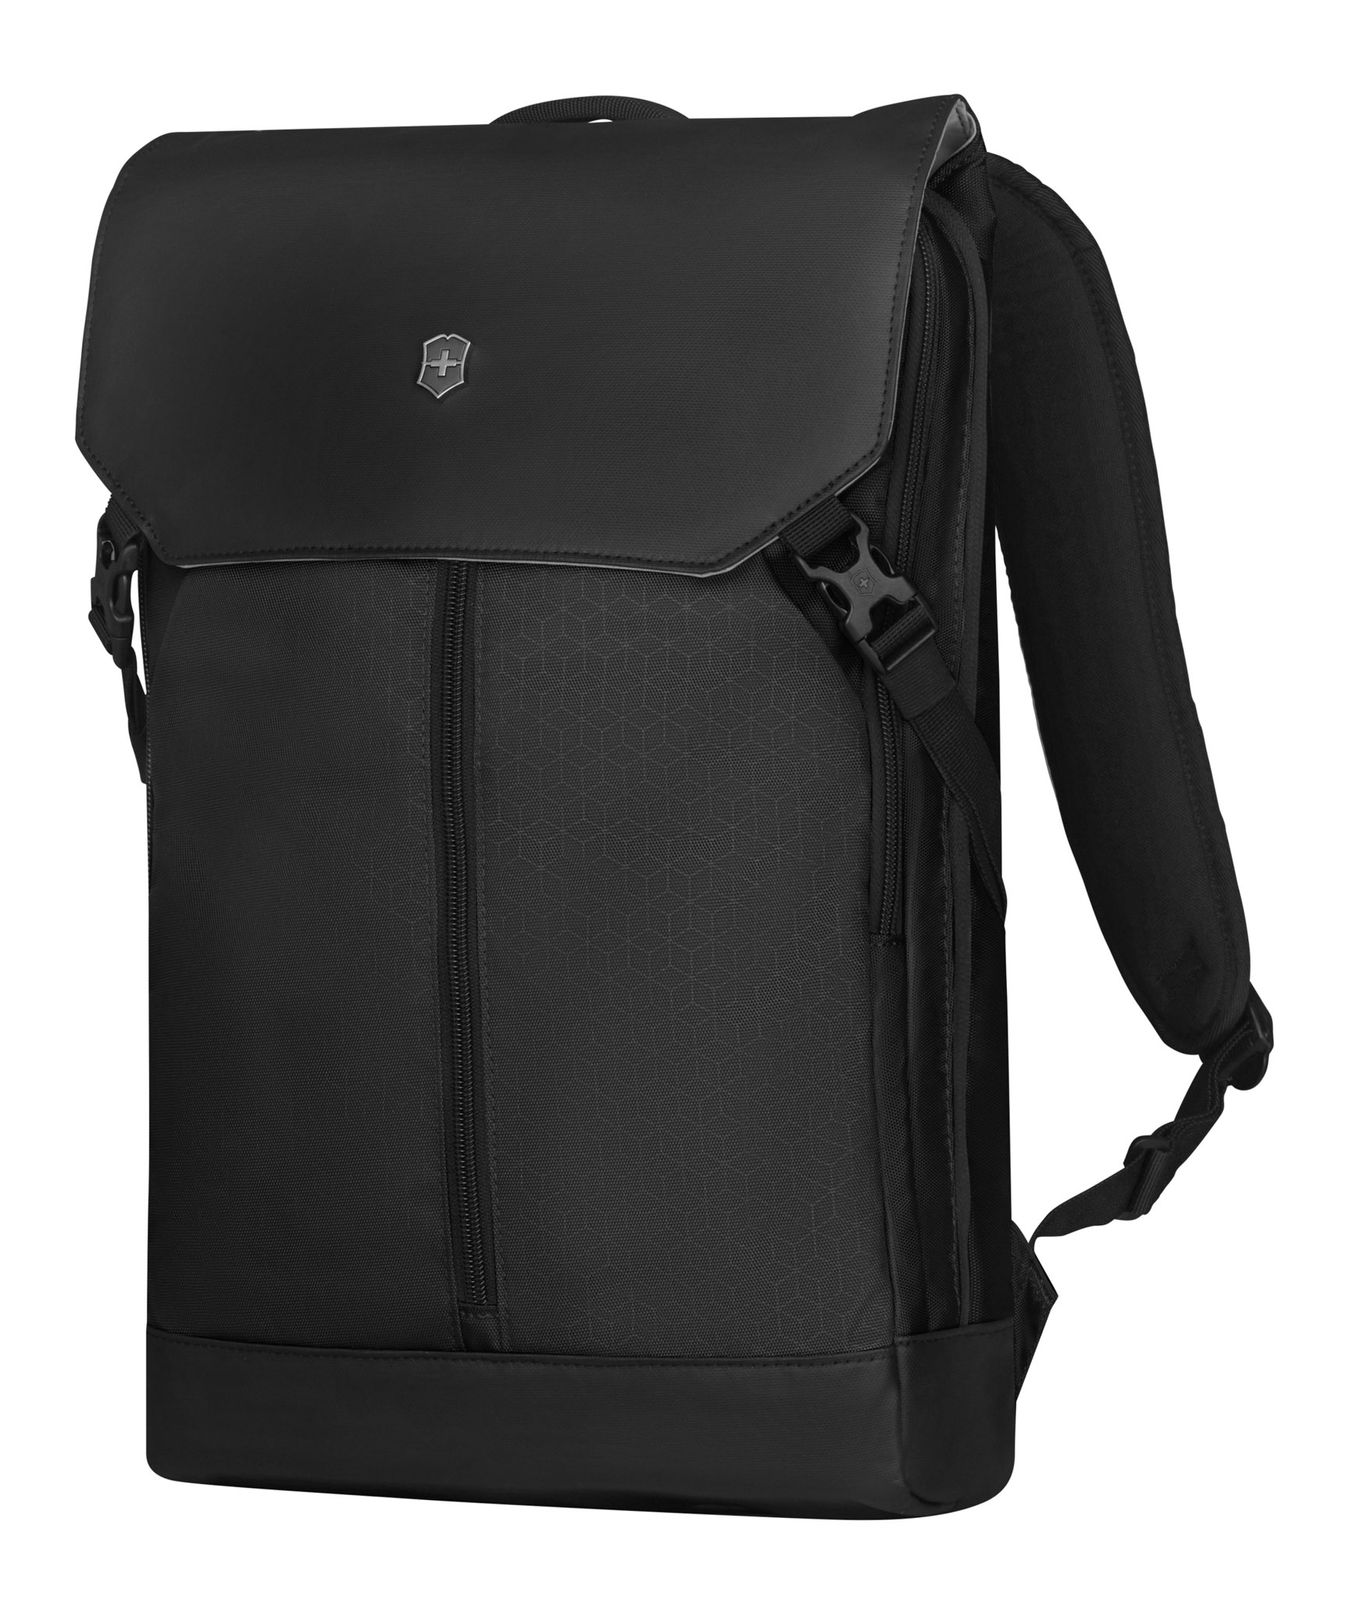 VICTORINOX-Flapover-Laptop-Backpack-Black-181006_3.jpg